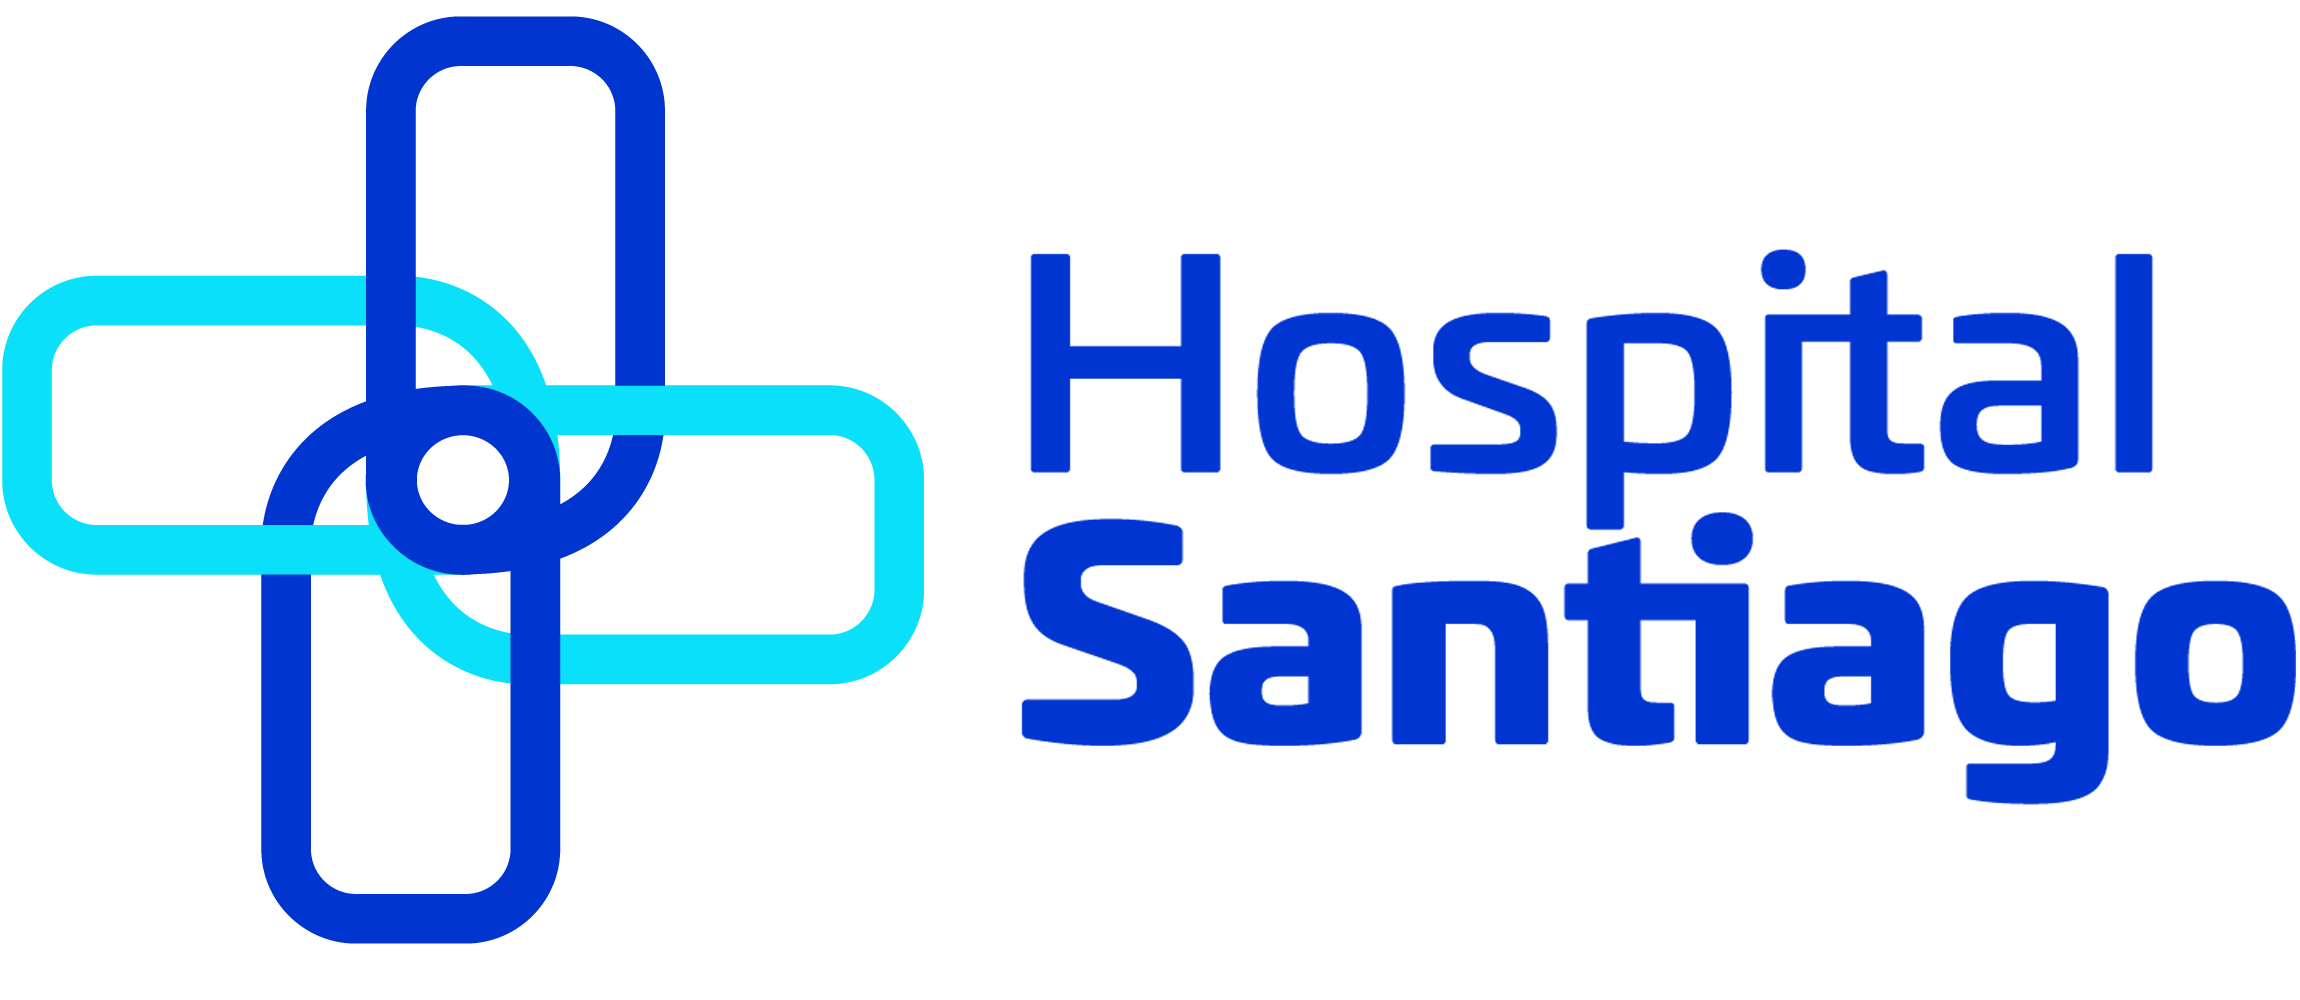 Hospital Santiago